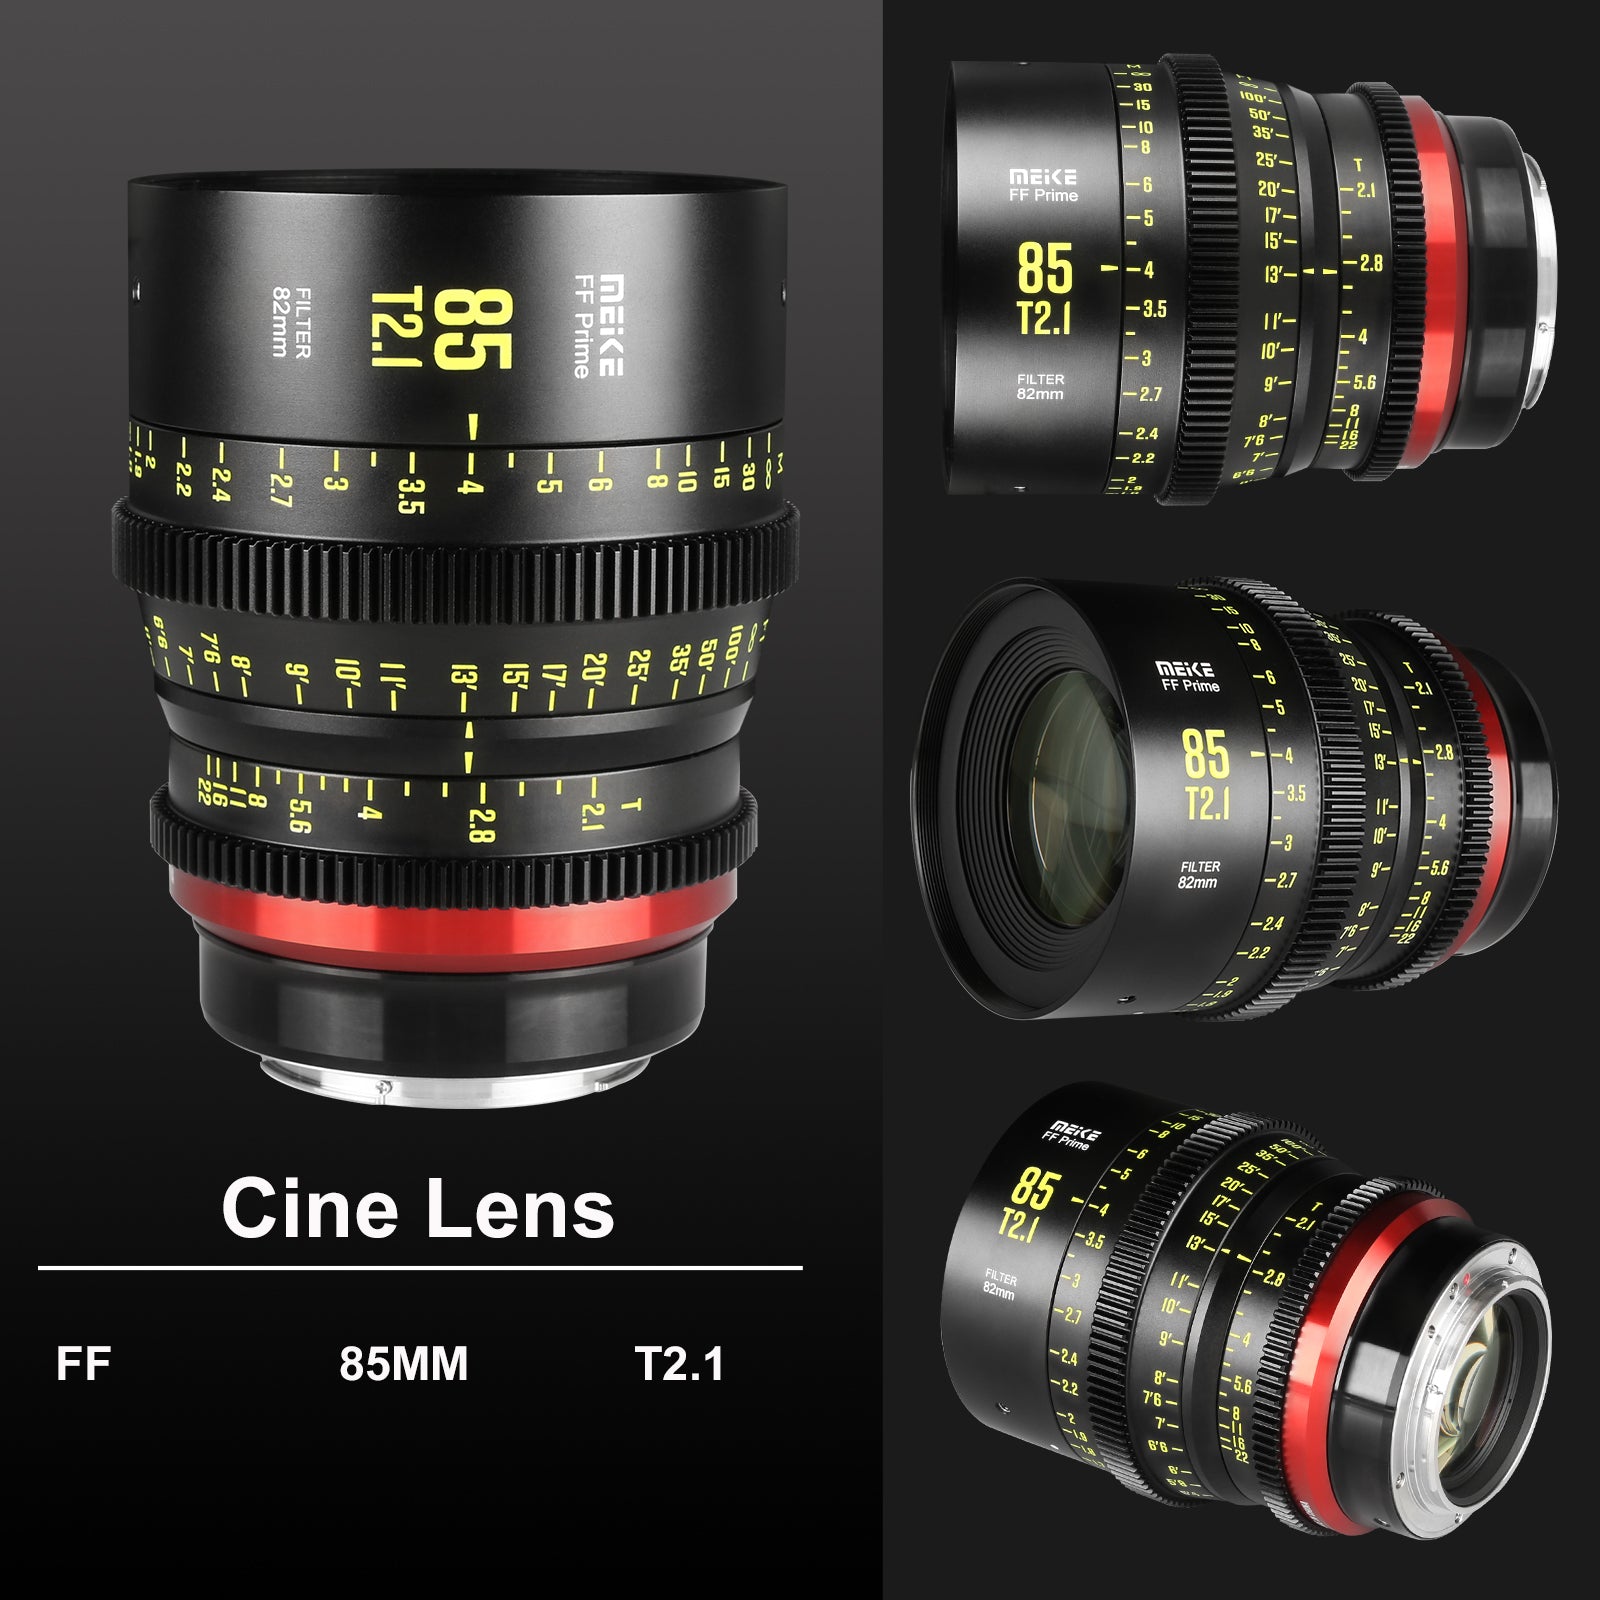 Meike Cinema Full Frame Cinema Prime 85mm T2.1 Lens (Canon EF Mount) in Different Perspectives